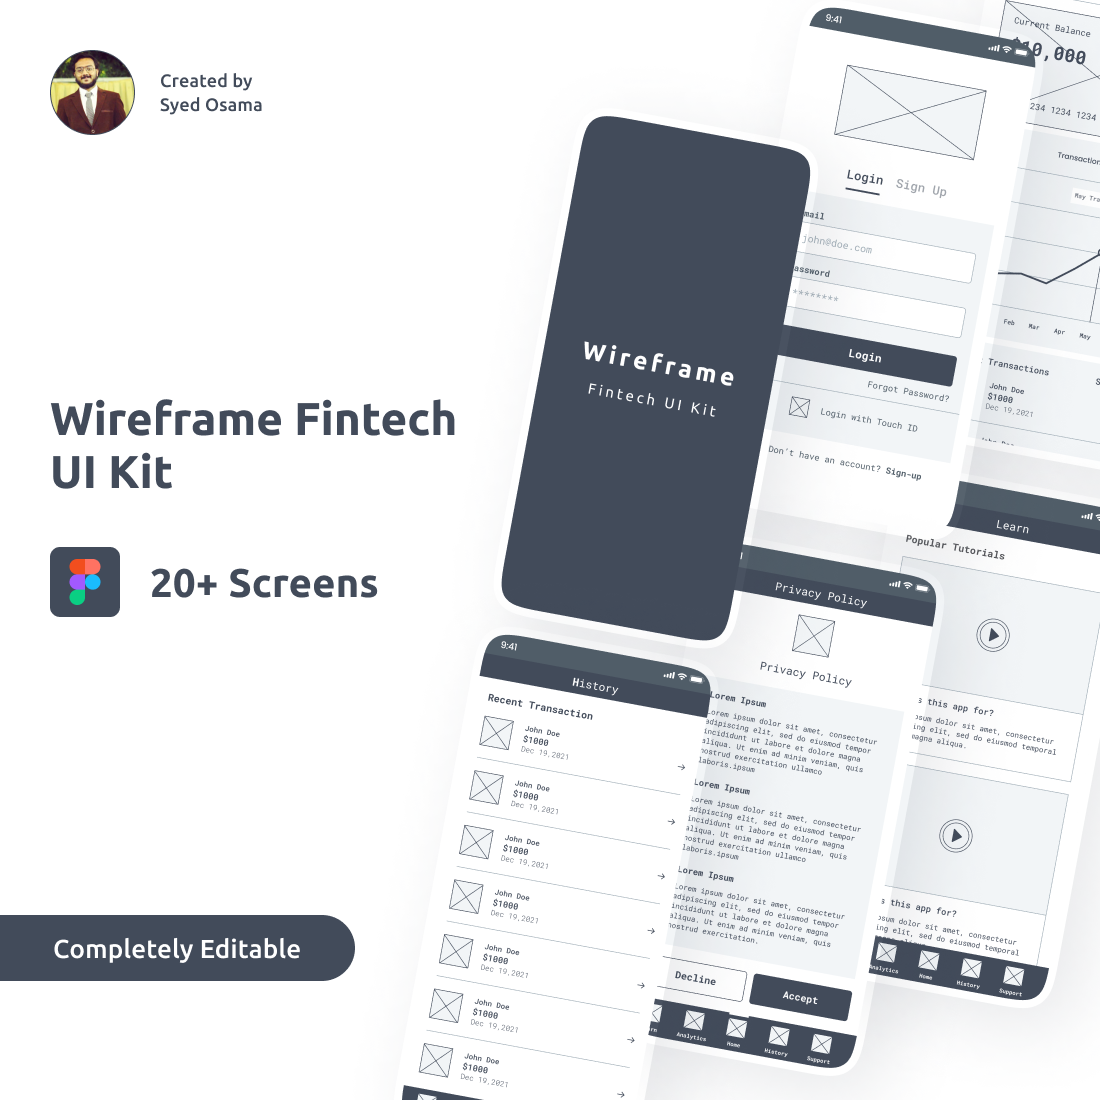 Fintech Wireframe UI Kit facebook image.